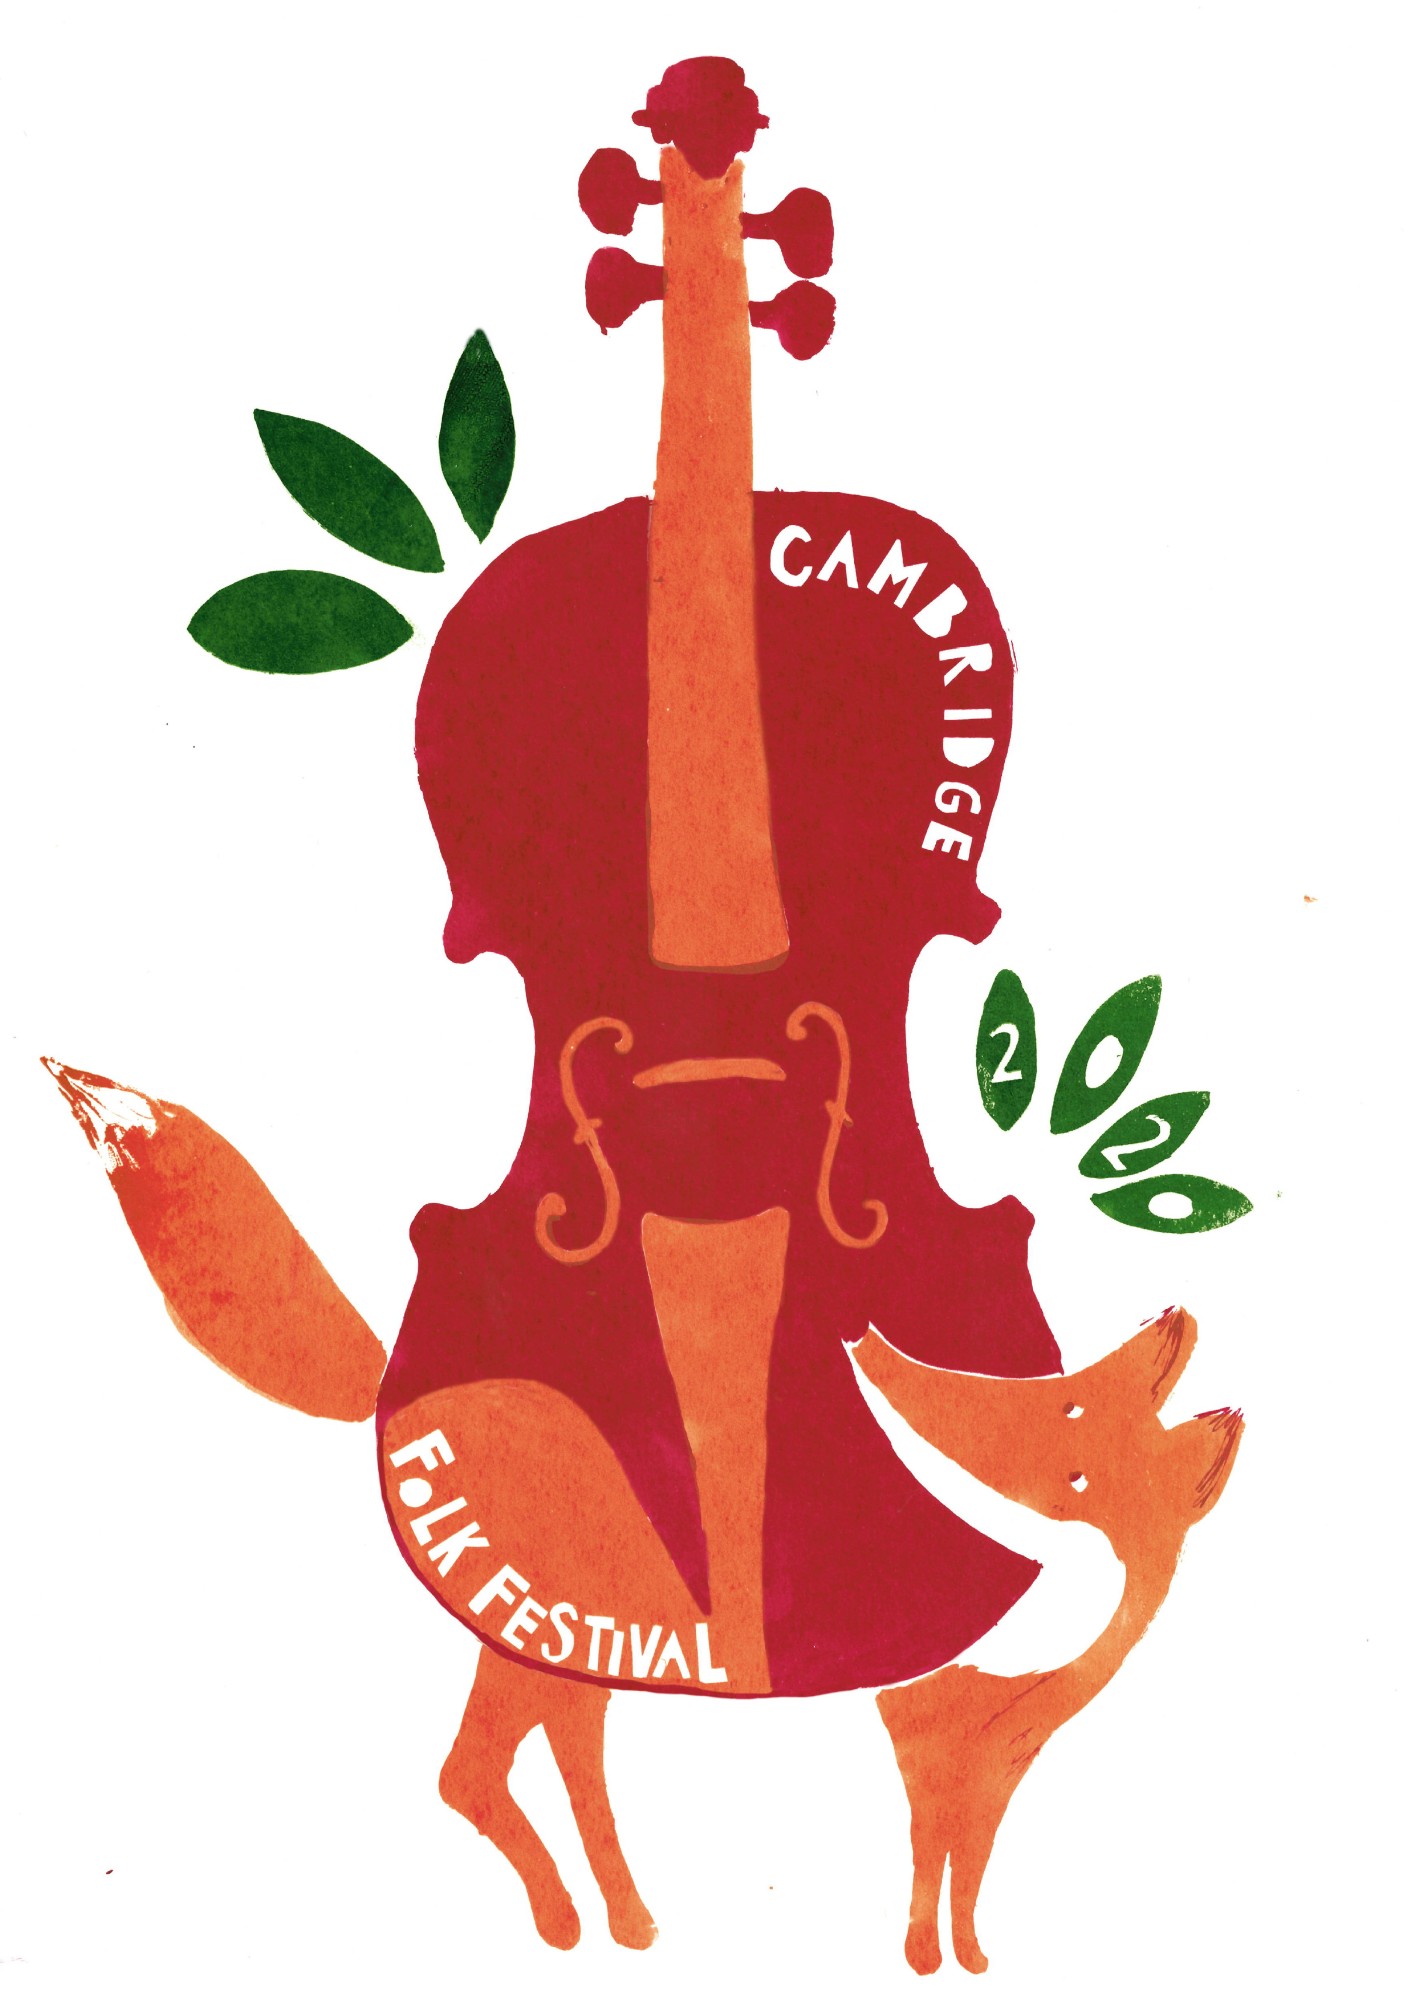 Screen print design for Cambridge Folk Festival 2020 (Shortlisted entry)